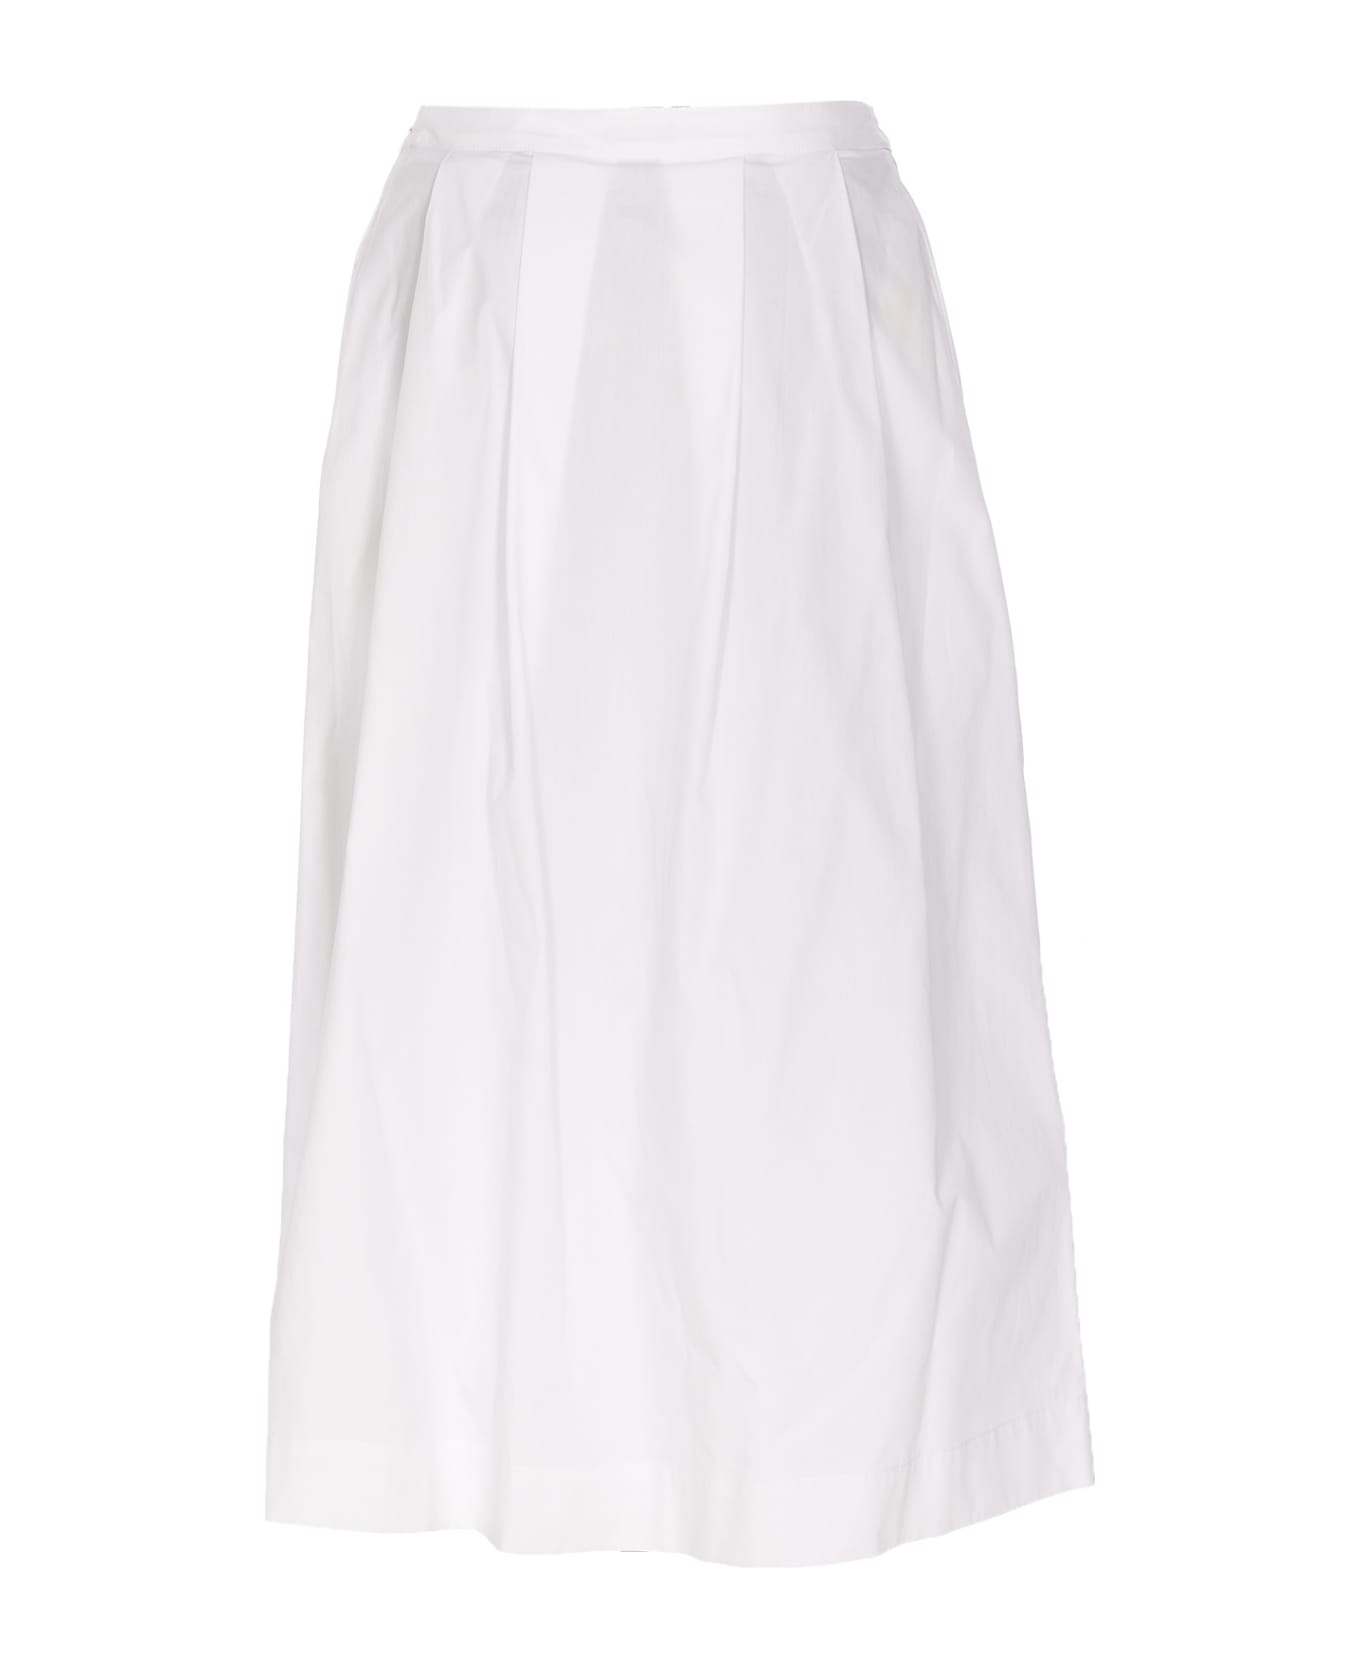 Pinko Popeline Skirt With Metallic Buttons - White